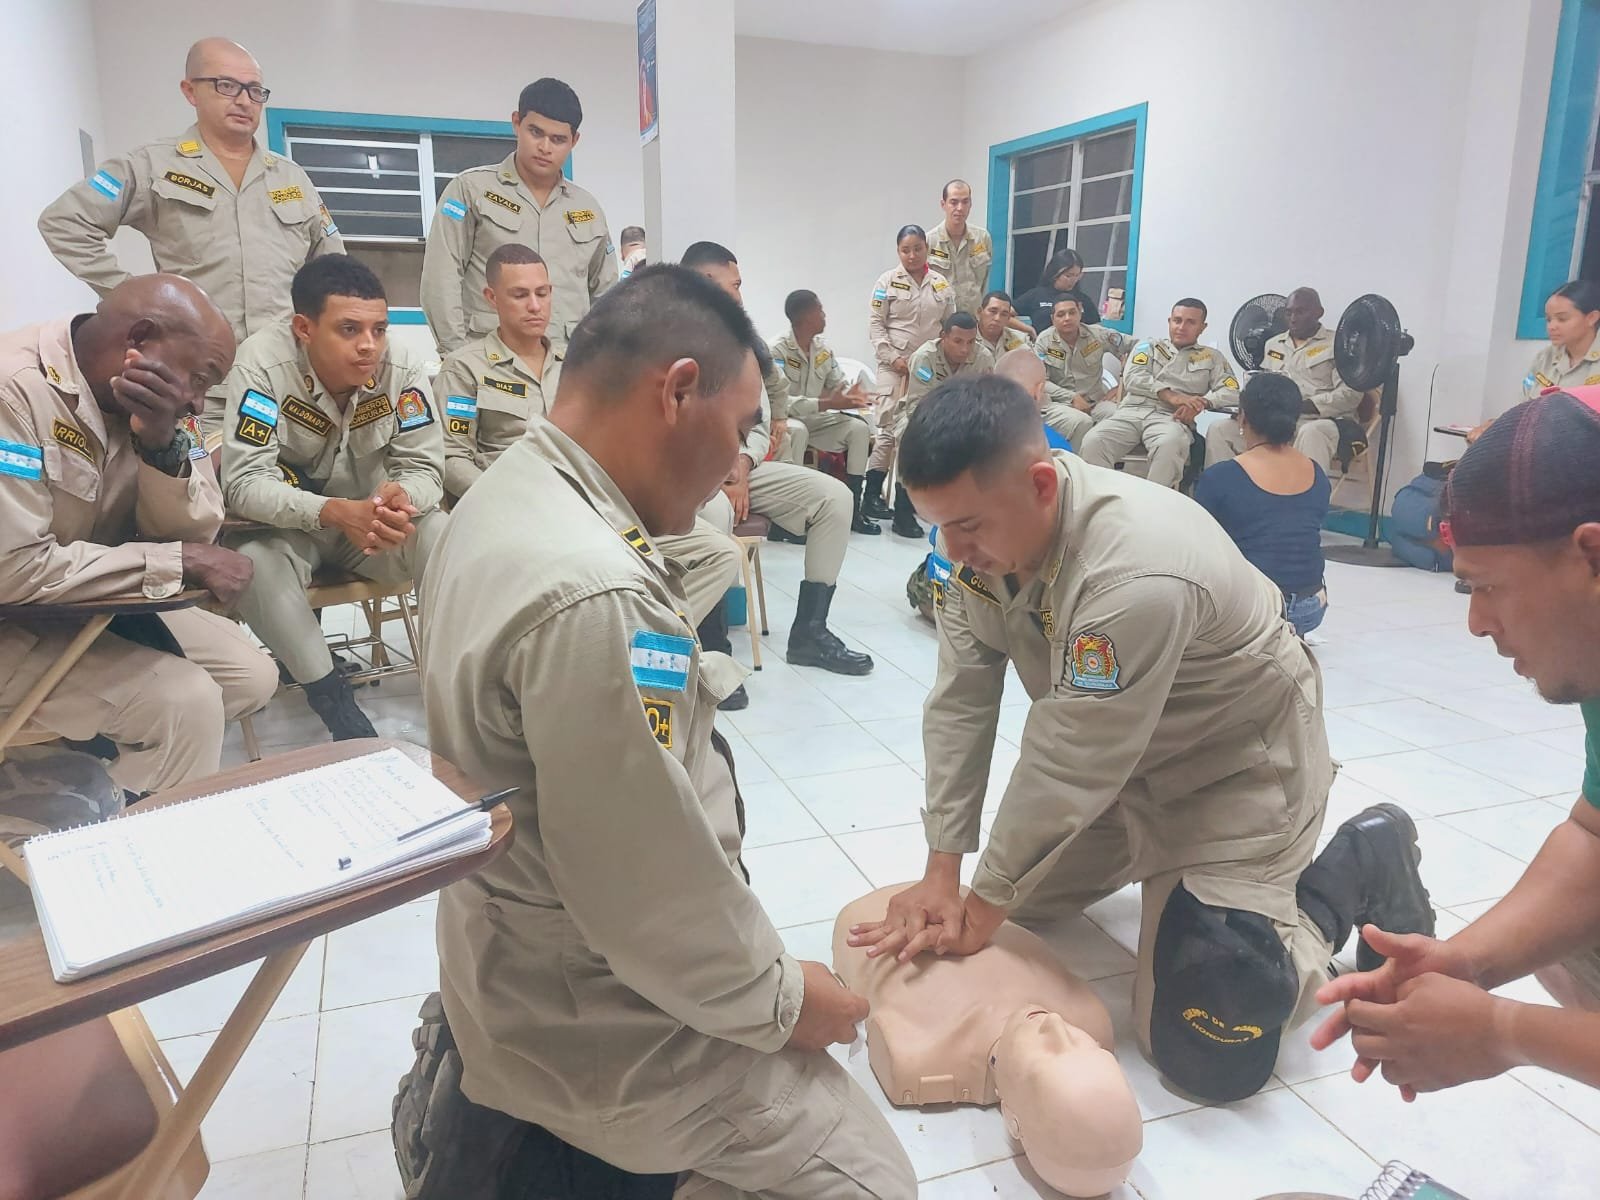 Island-Diving-Center-Emergency-First-Response-CPR-Training-Roatan-Fire-Department-32.jpg